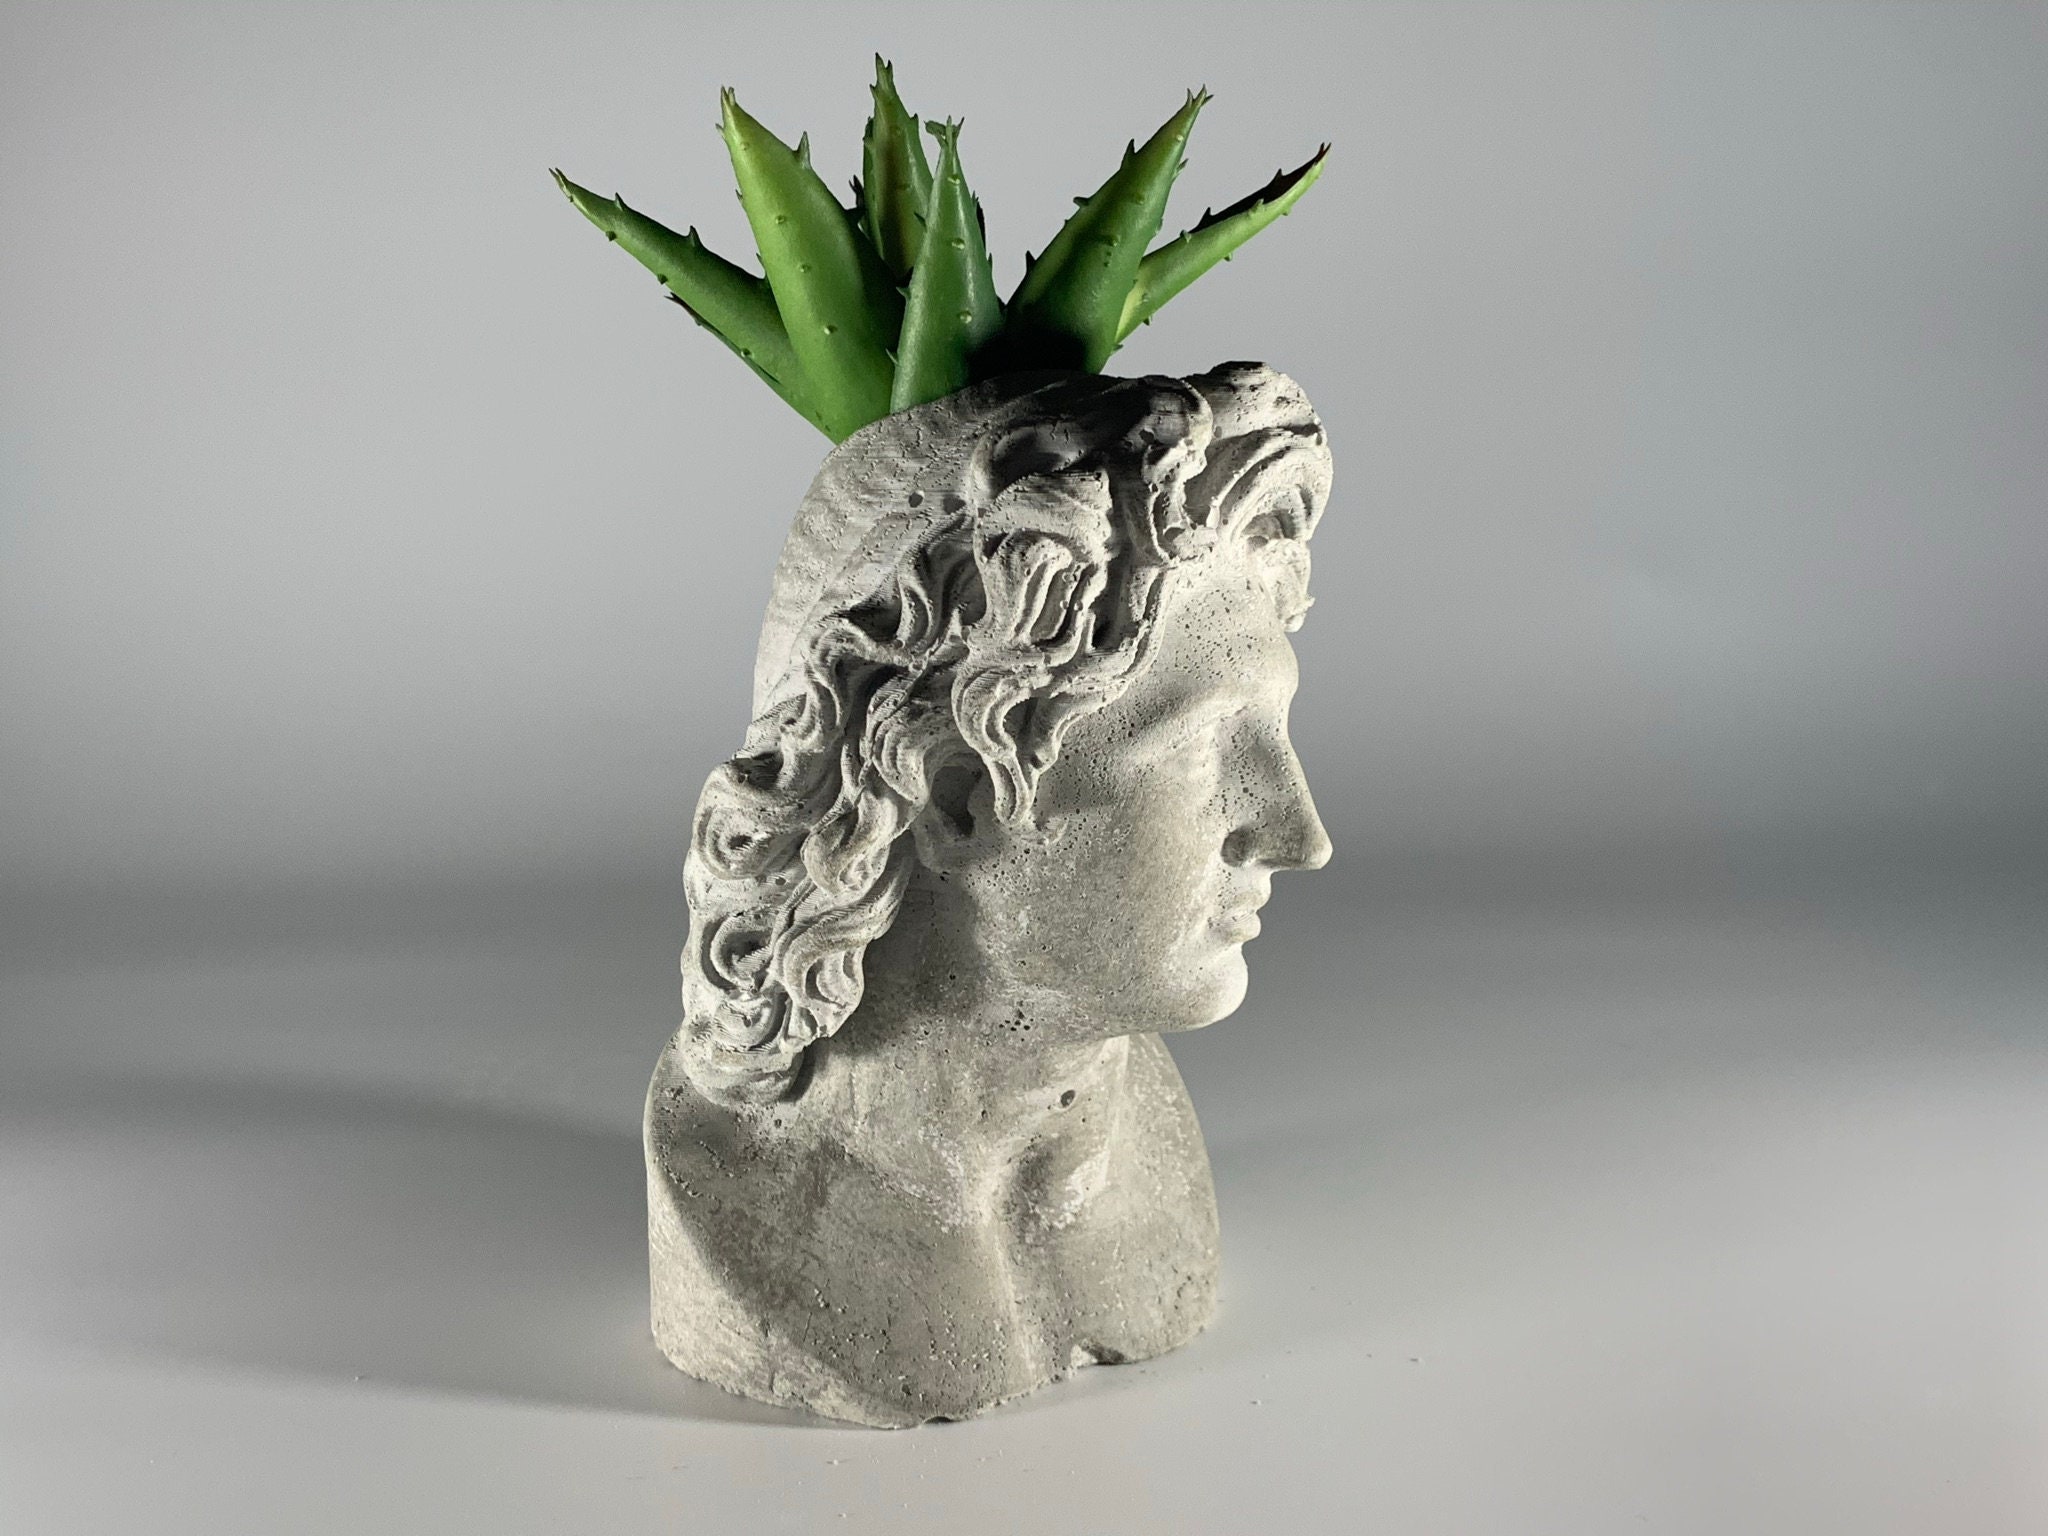 Gepege Succulent Plants Pot Set of 3 Modern Indoor/Outdoor Cement Statue Face Vase Concrete Head Planter for Home Office Desk Decoration 3 Inch 